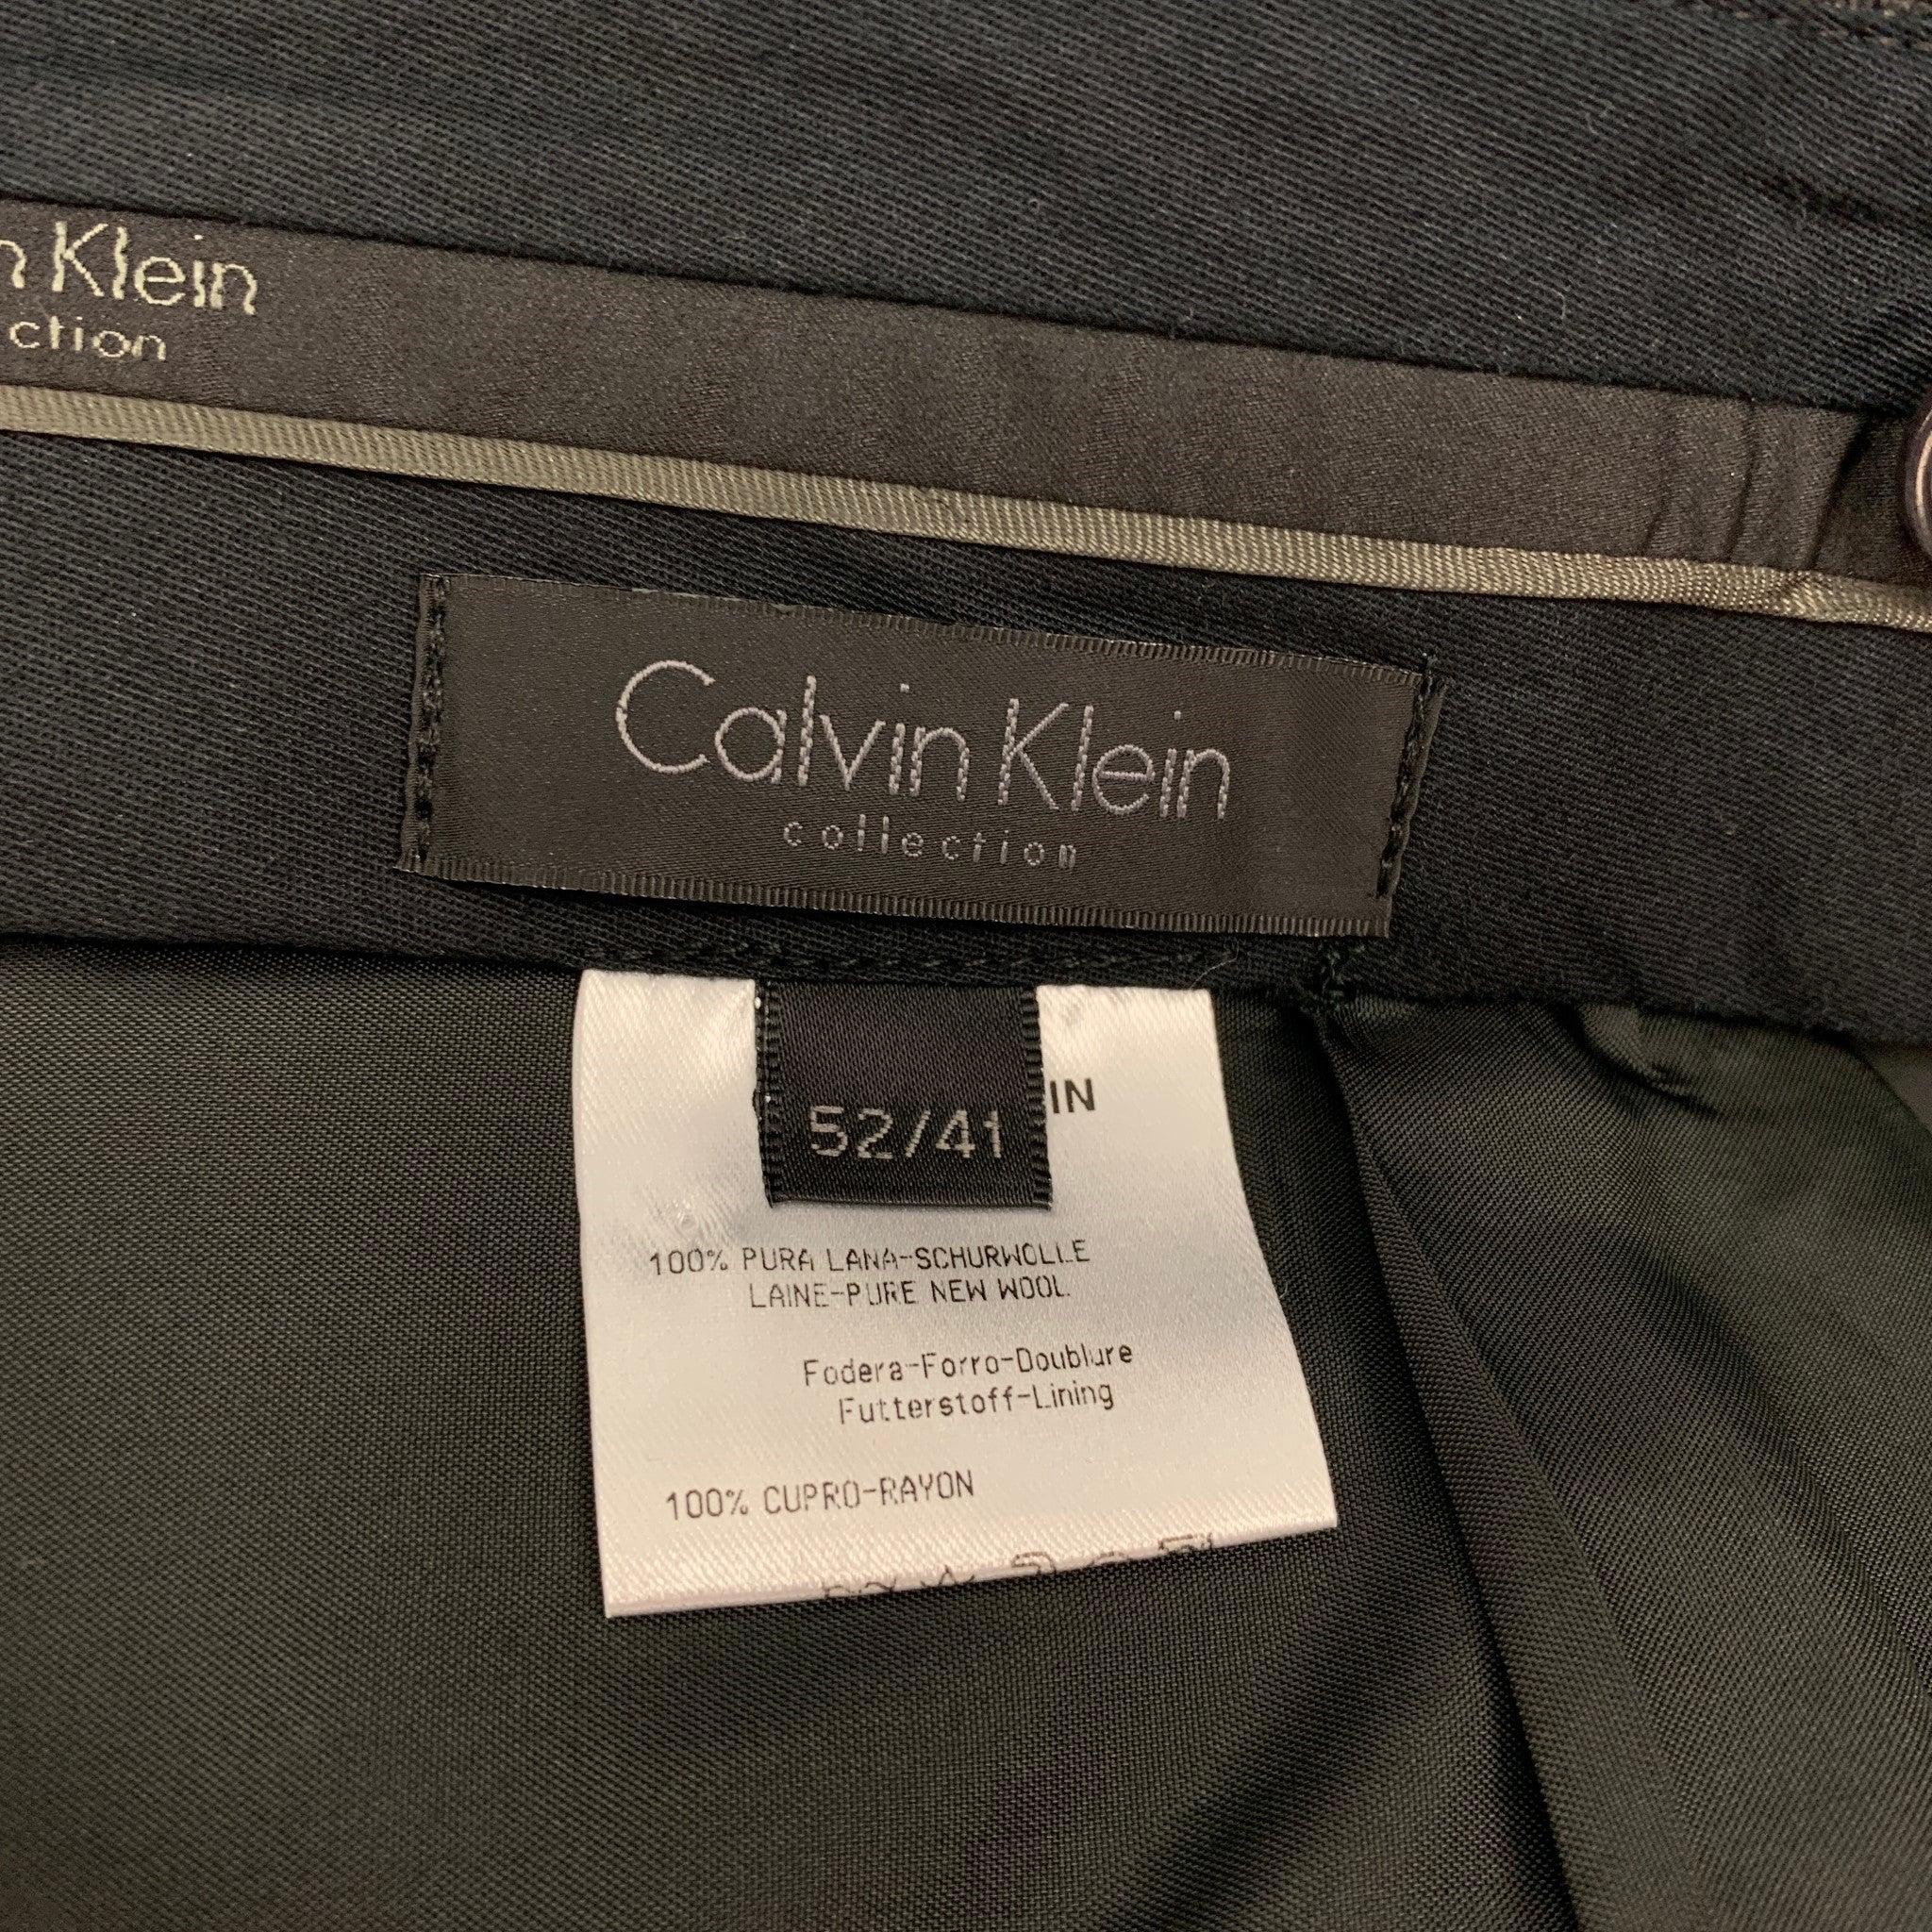 CALVIN KLEIN COLLECTION Size 42 Charcoal Wool Notch Lapel Suit For Sale 6